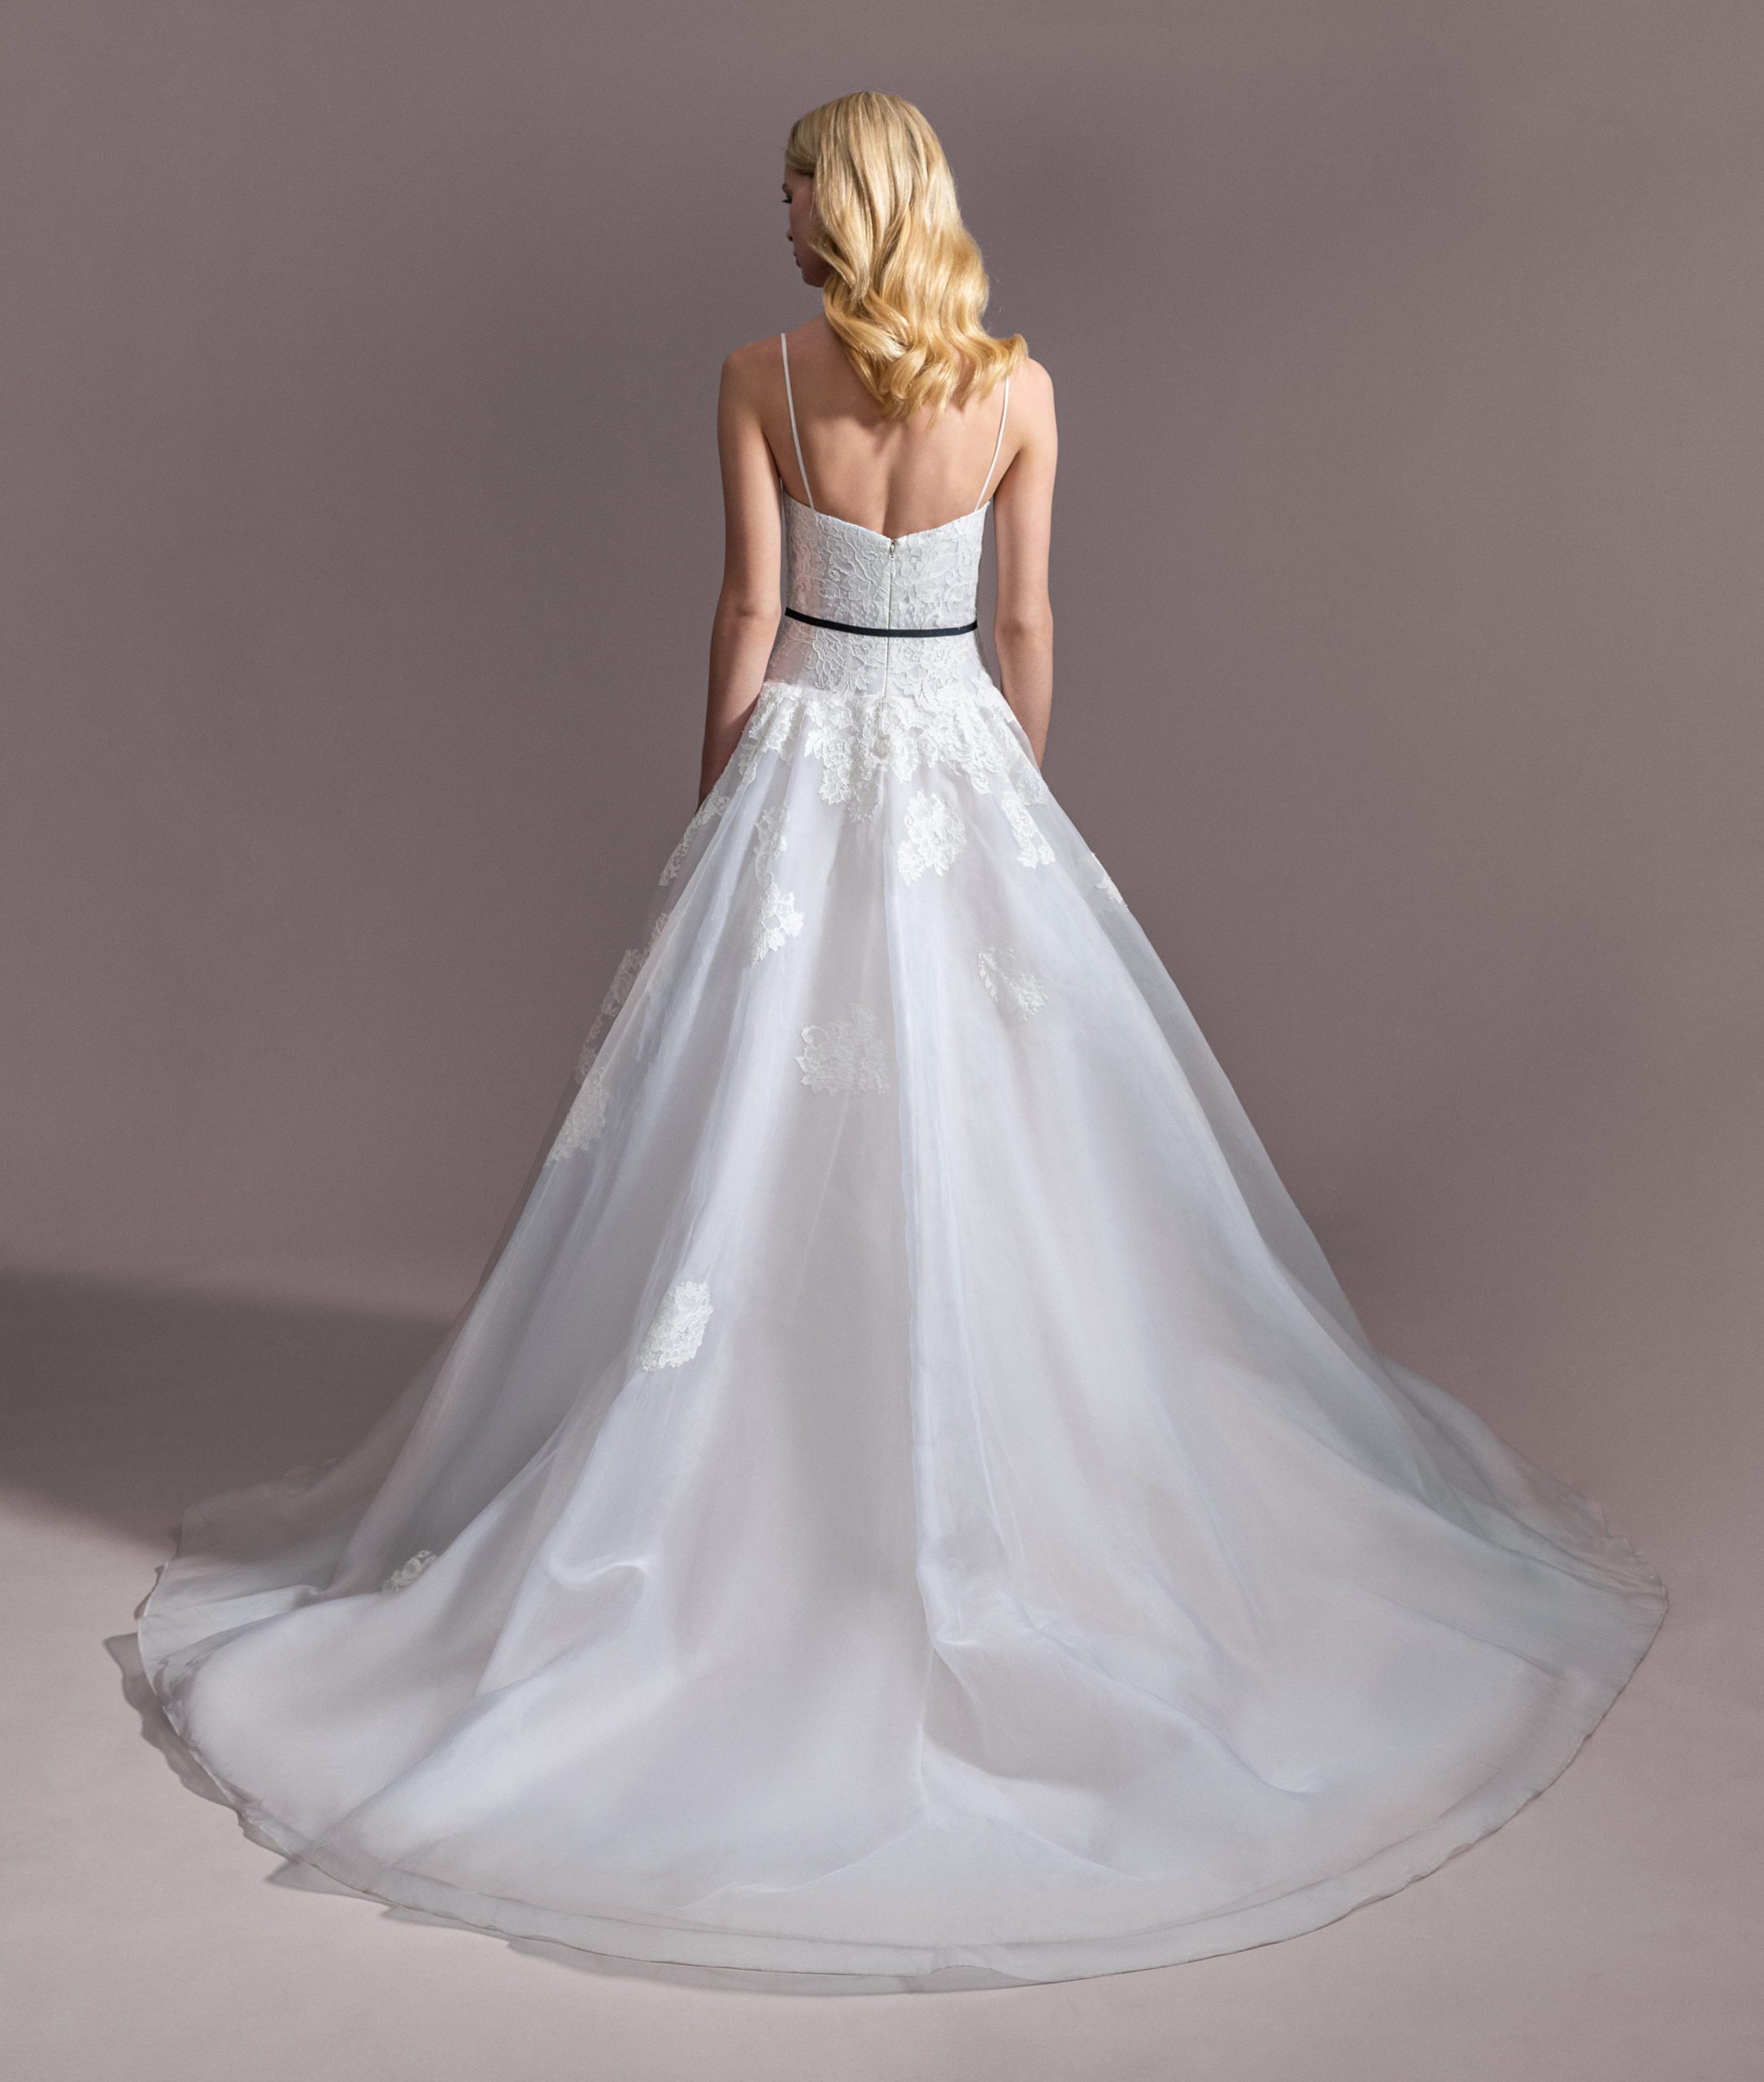 Allison * sample size 14 - high end lace wedding dress with plunging V